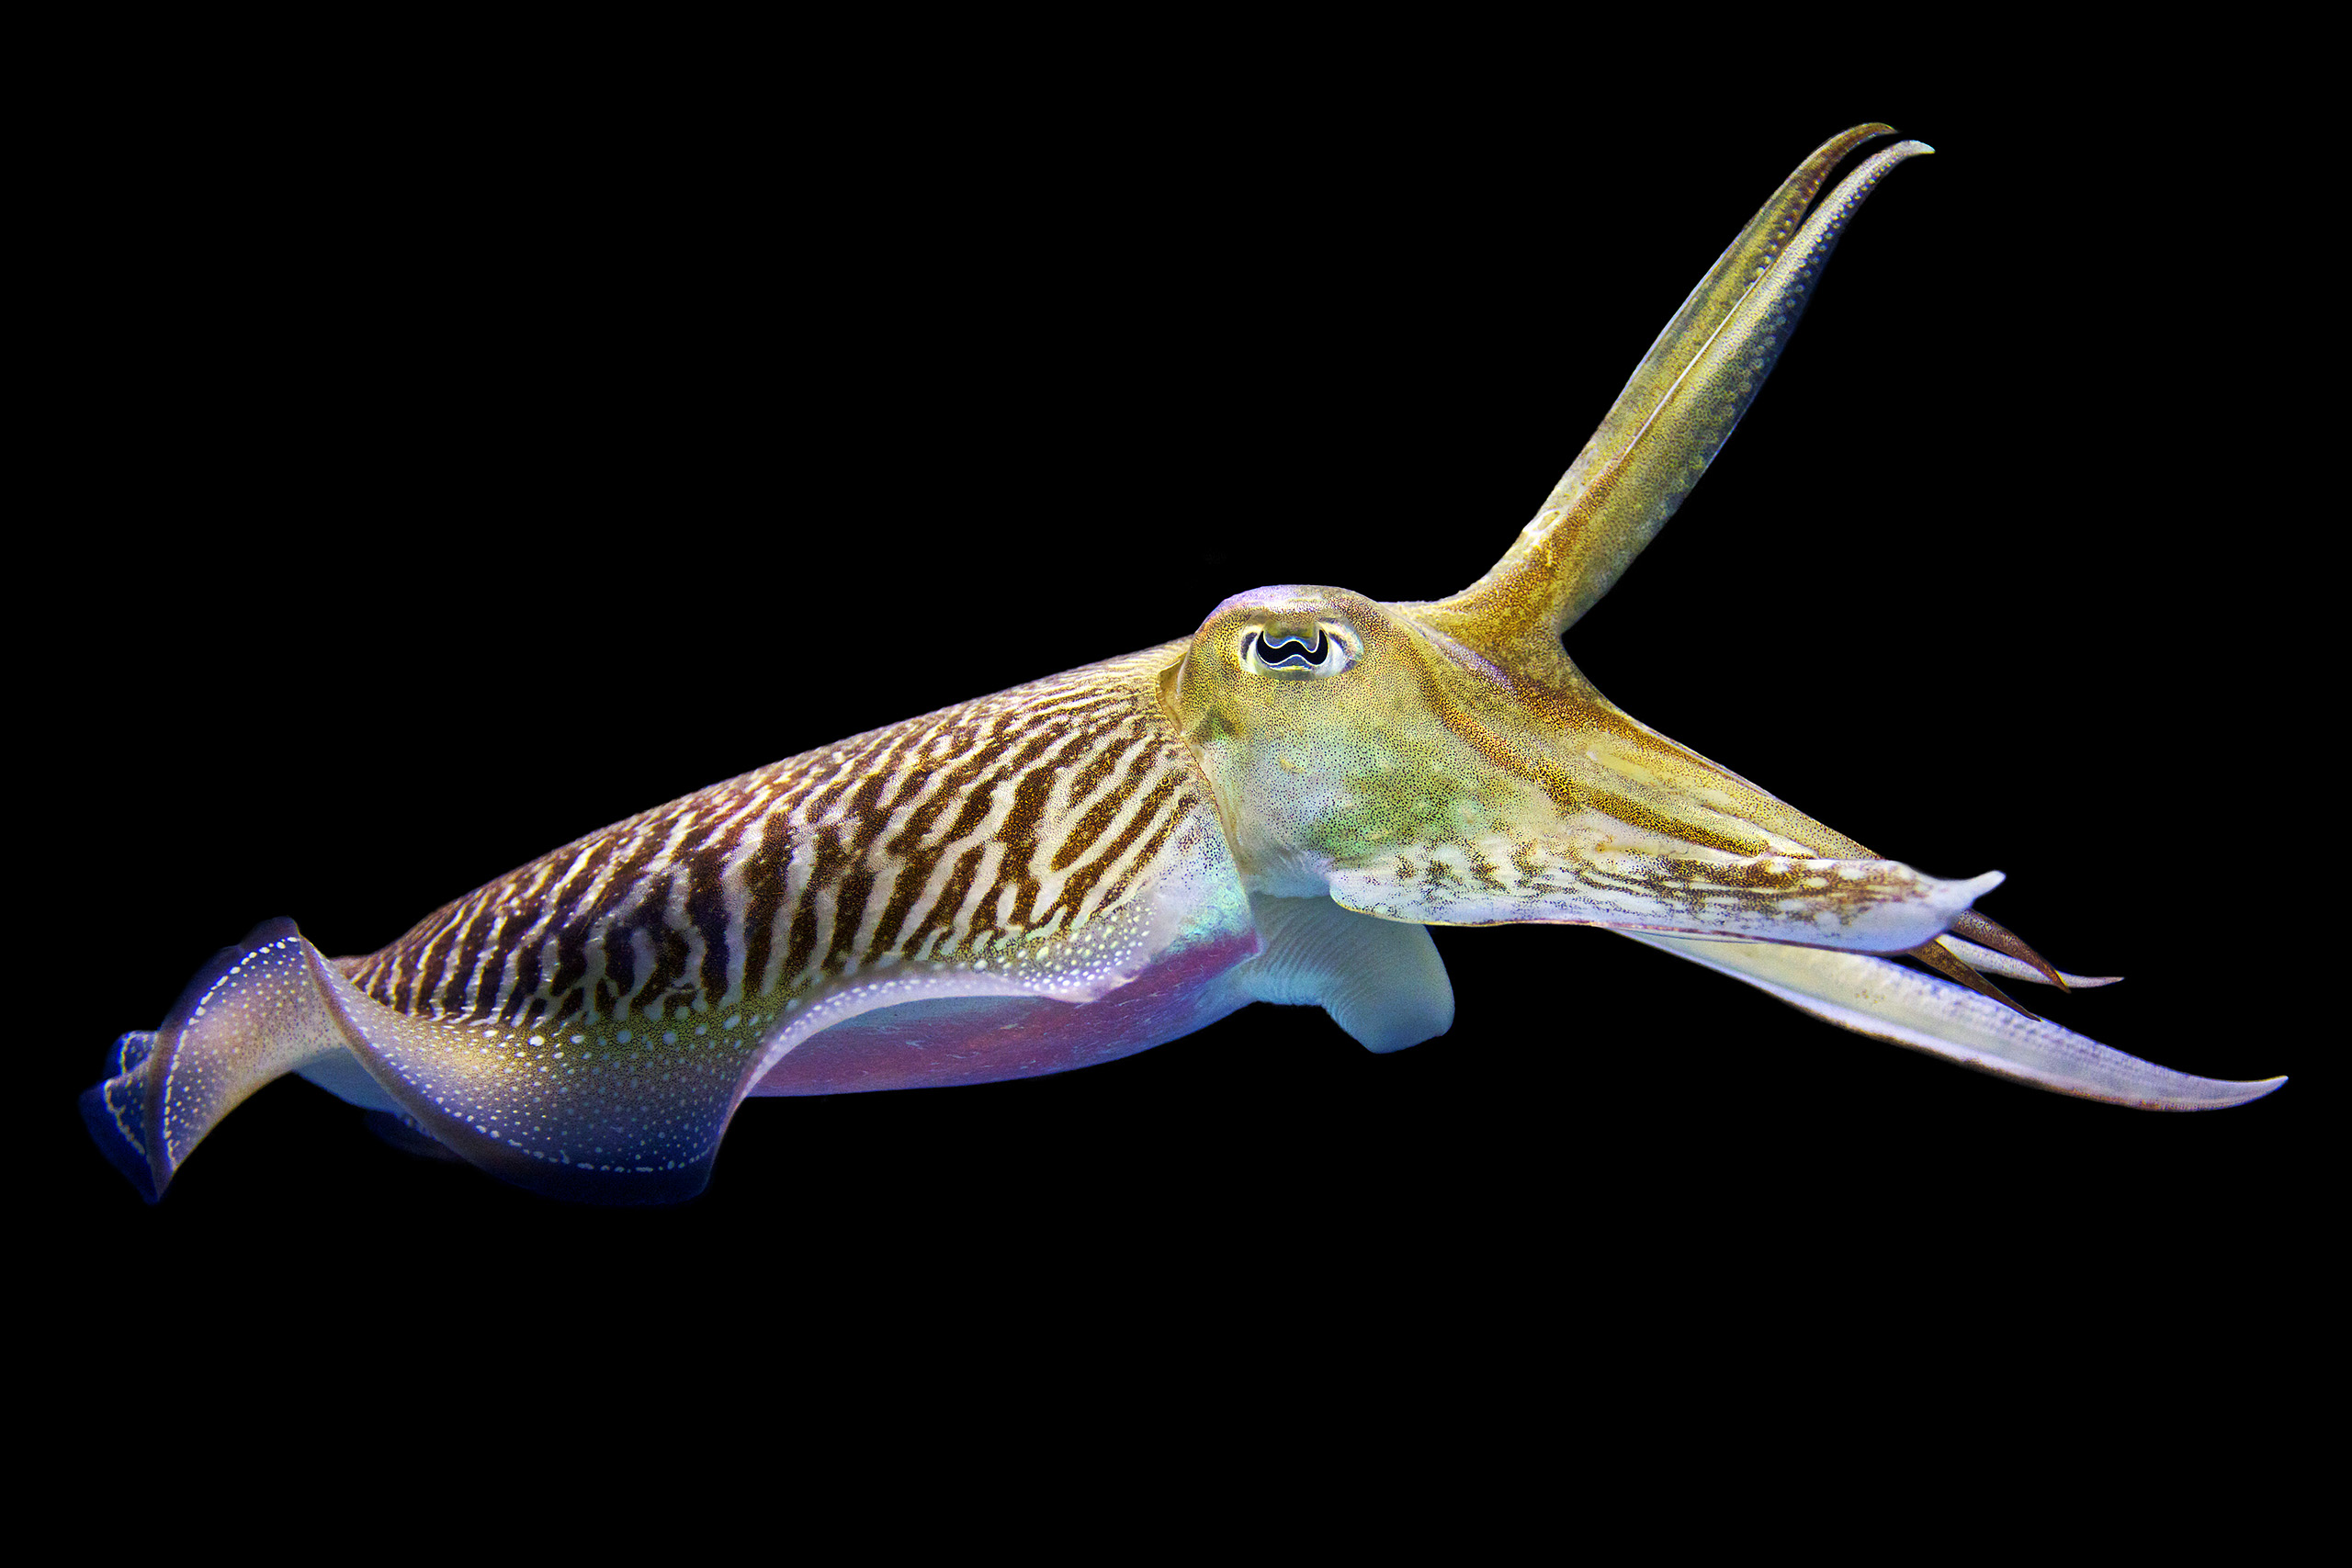 Giant cuttlefish 1